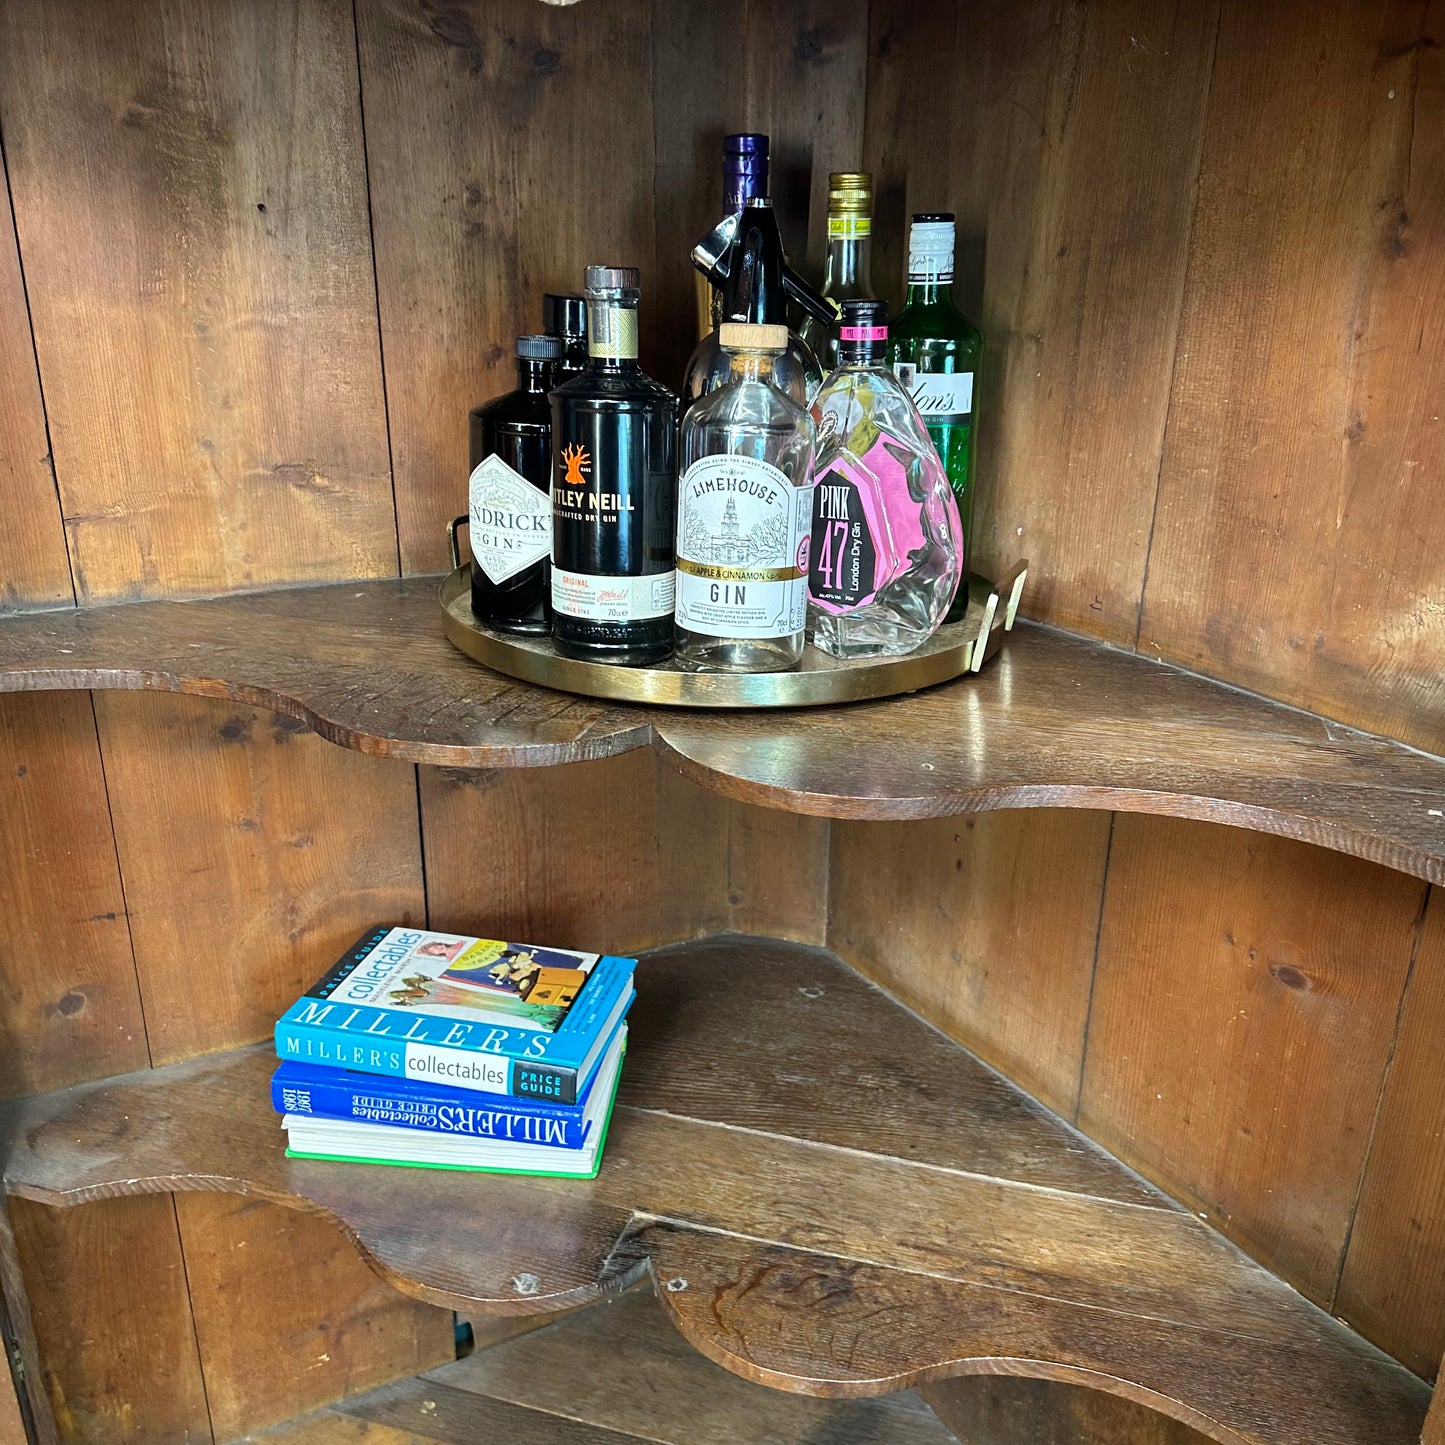 Antique Corner Cupboard / Solid Oak / Georgian Corner Cabinet / Uk Delivery